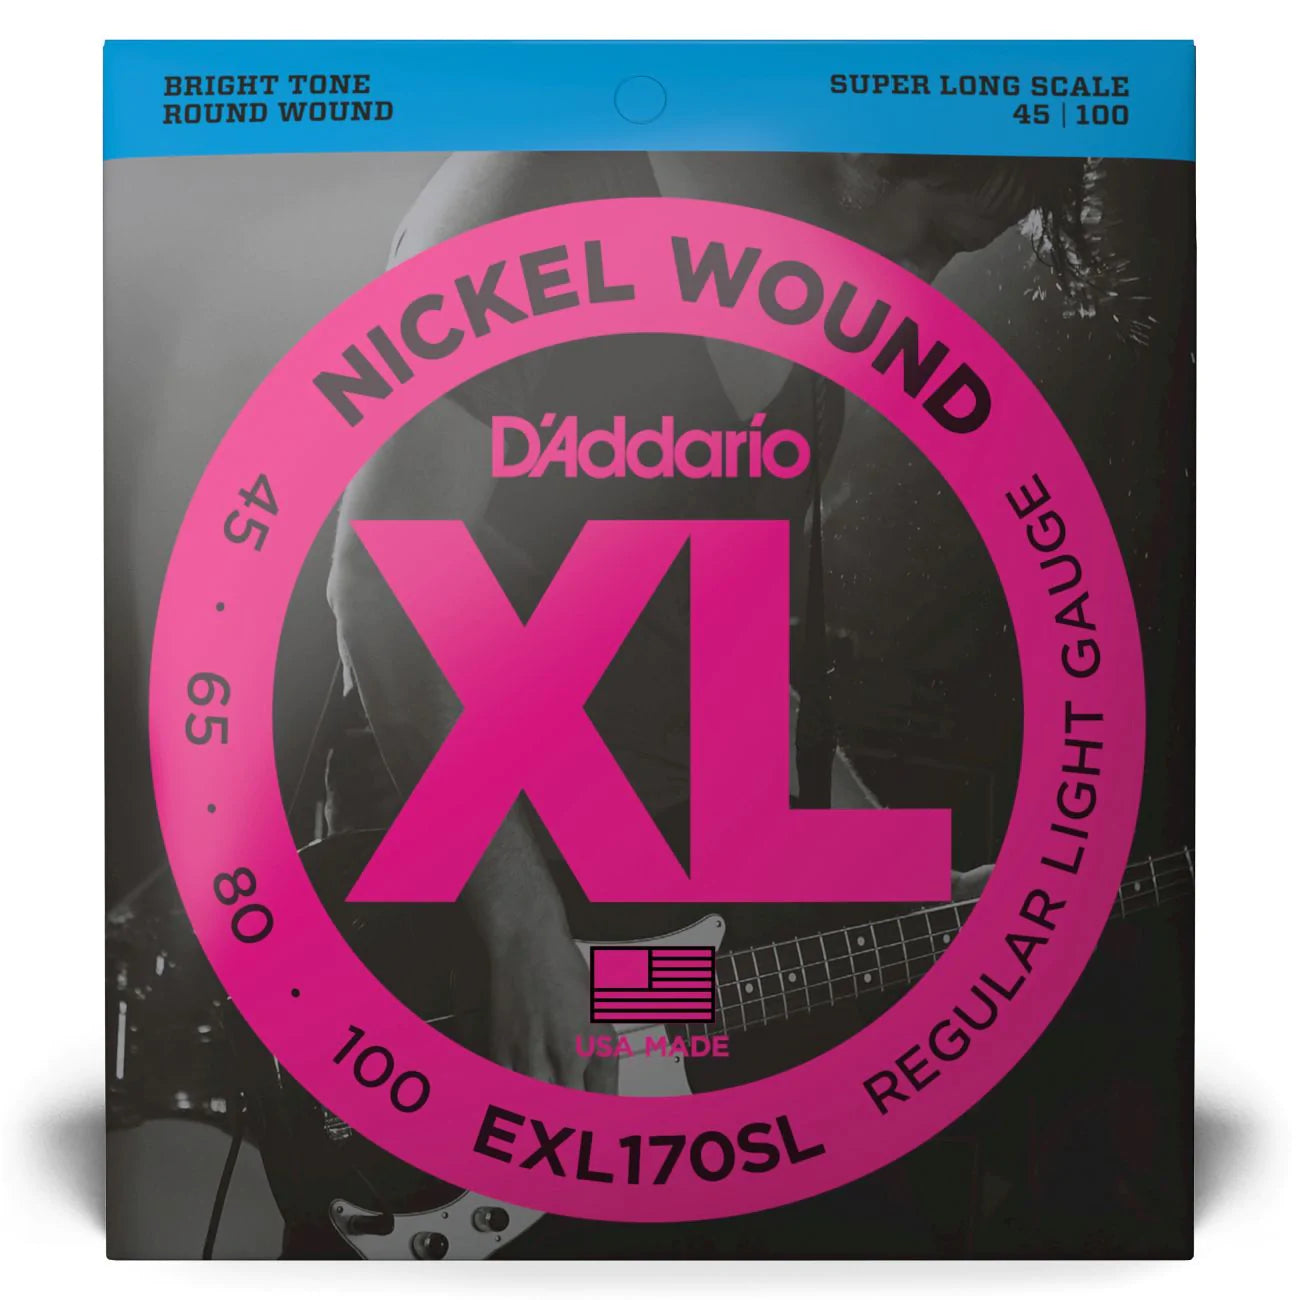 D'Addario EXL170SL | XL Nickel Wound Bass Strings 45-100 Gauge | Light | Super Long Scale